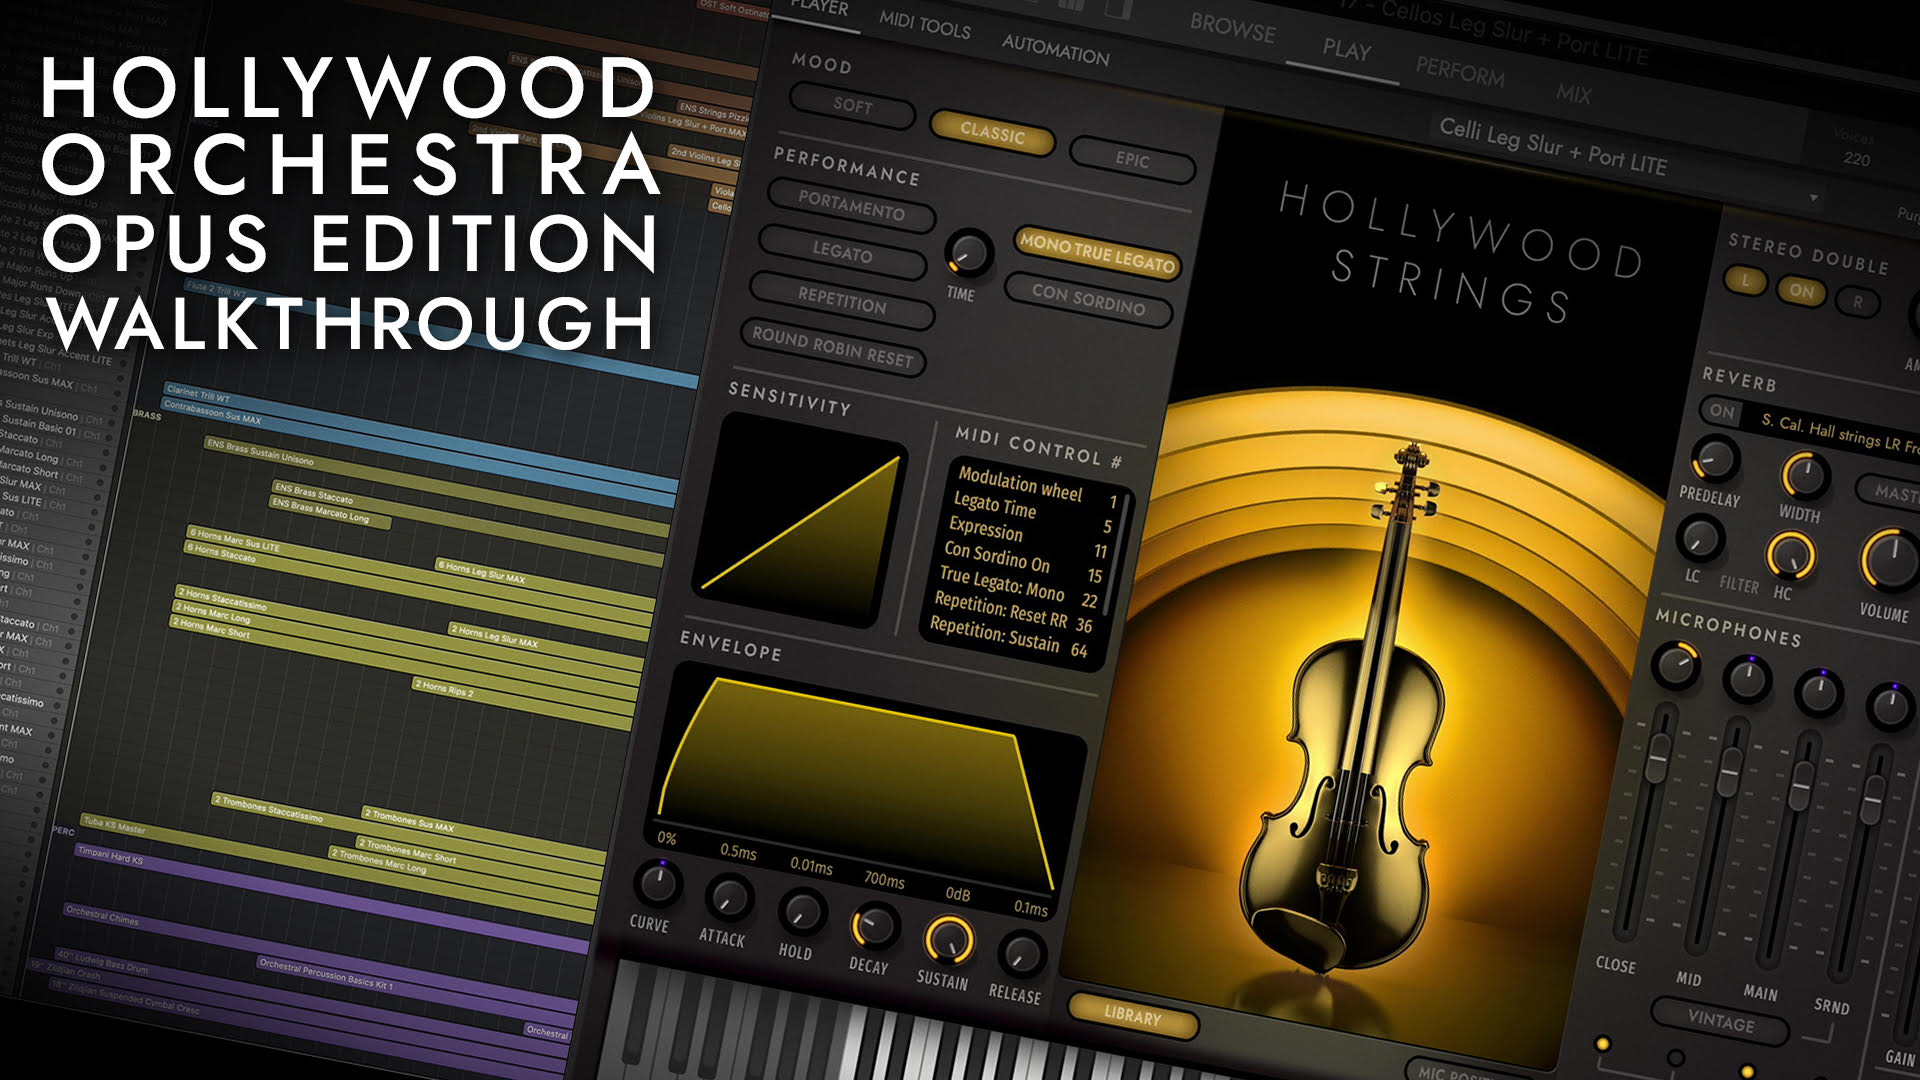 Watch the Hollywood Orchestra Opus Edition Walkthrough